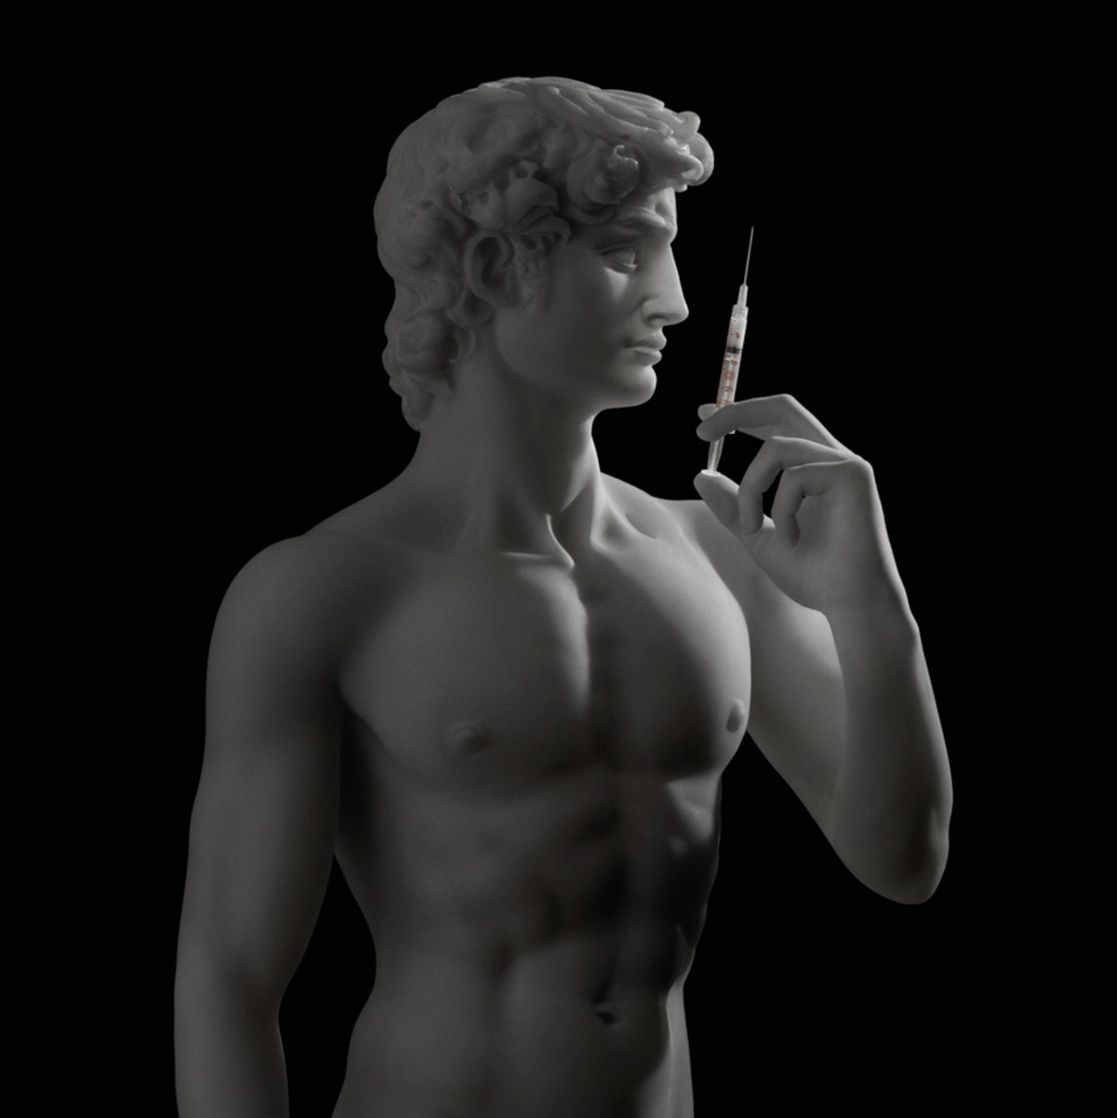 a statue of a person holding a cigarette